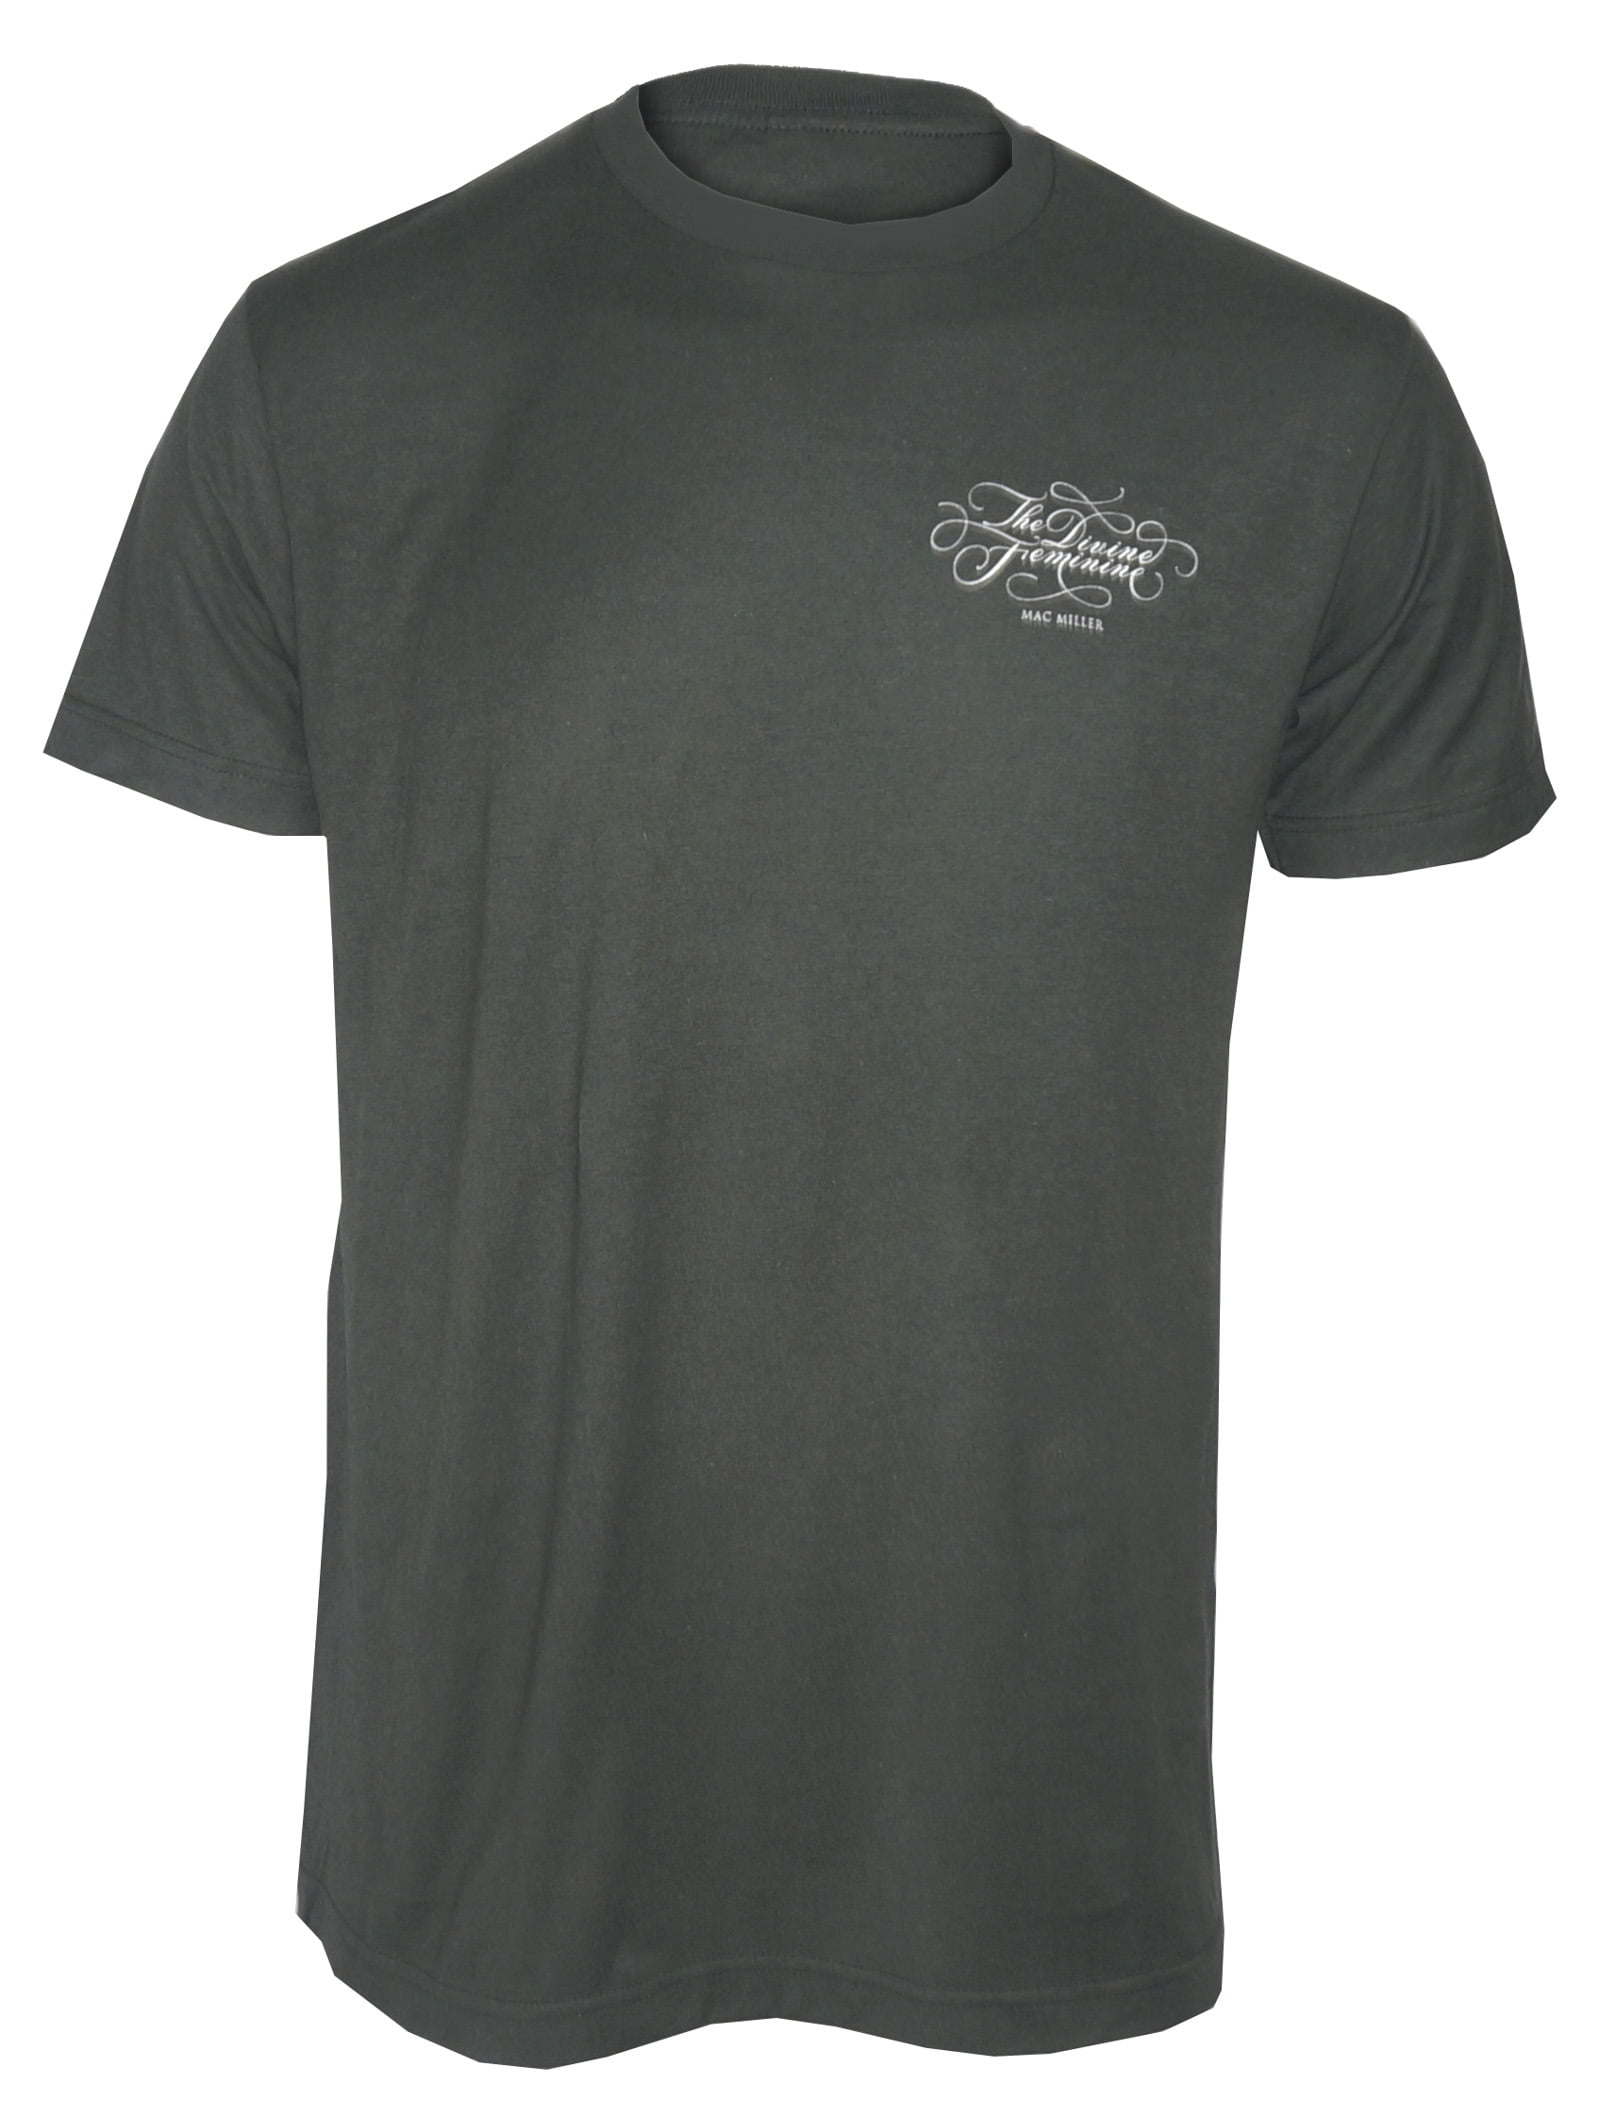 FEA - Mac Miller Divine Feminine T-Shirt Charcoal 2XL - Walmart.com ...